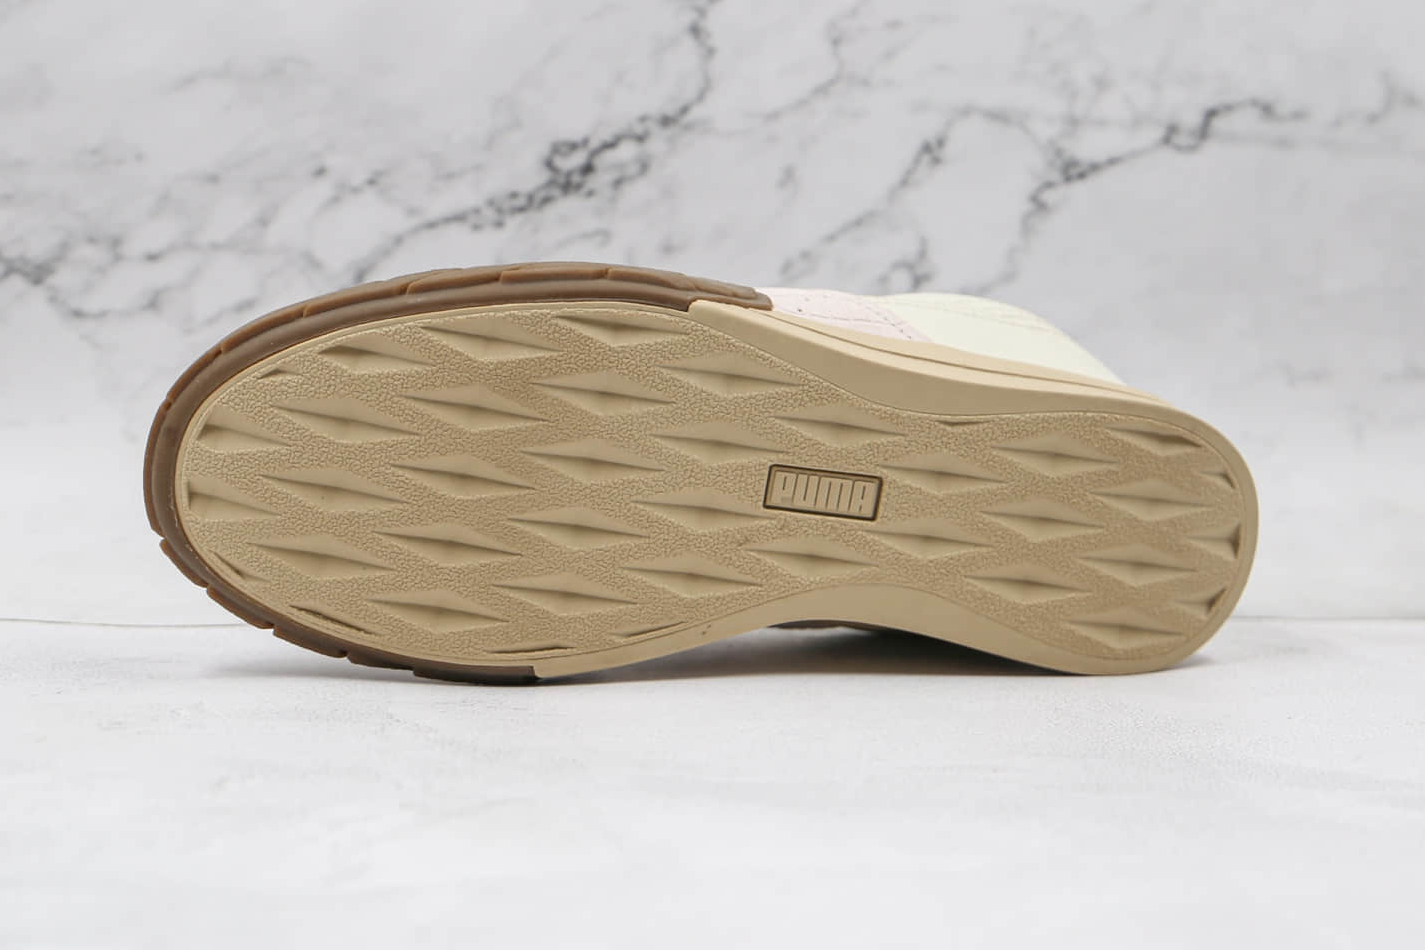 Puma Eris Reptile 'Marshmallow Pale Khaki' 375115-01 - Stylish Sneakers for Men